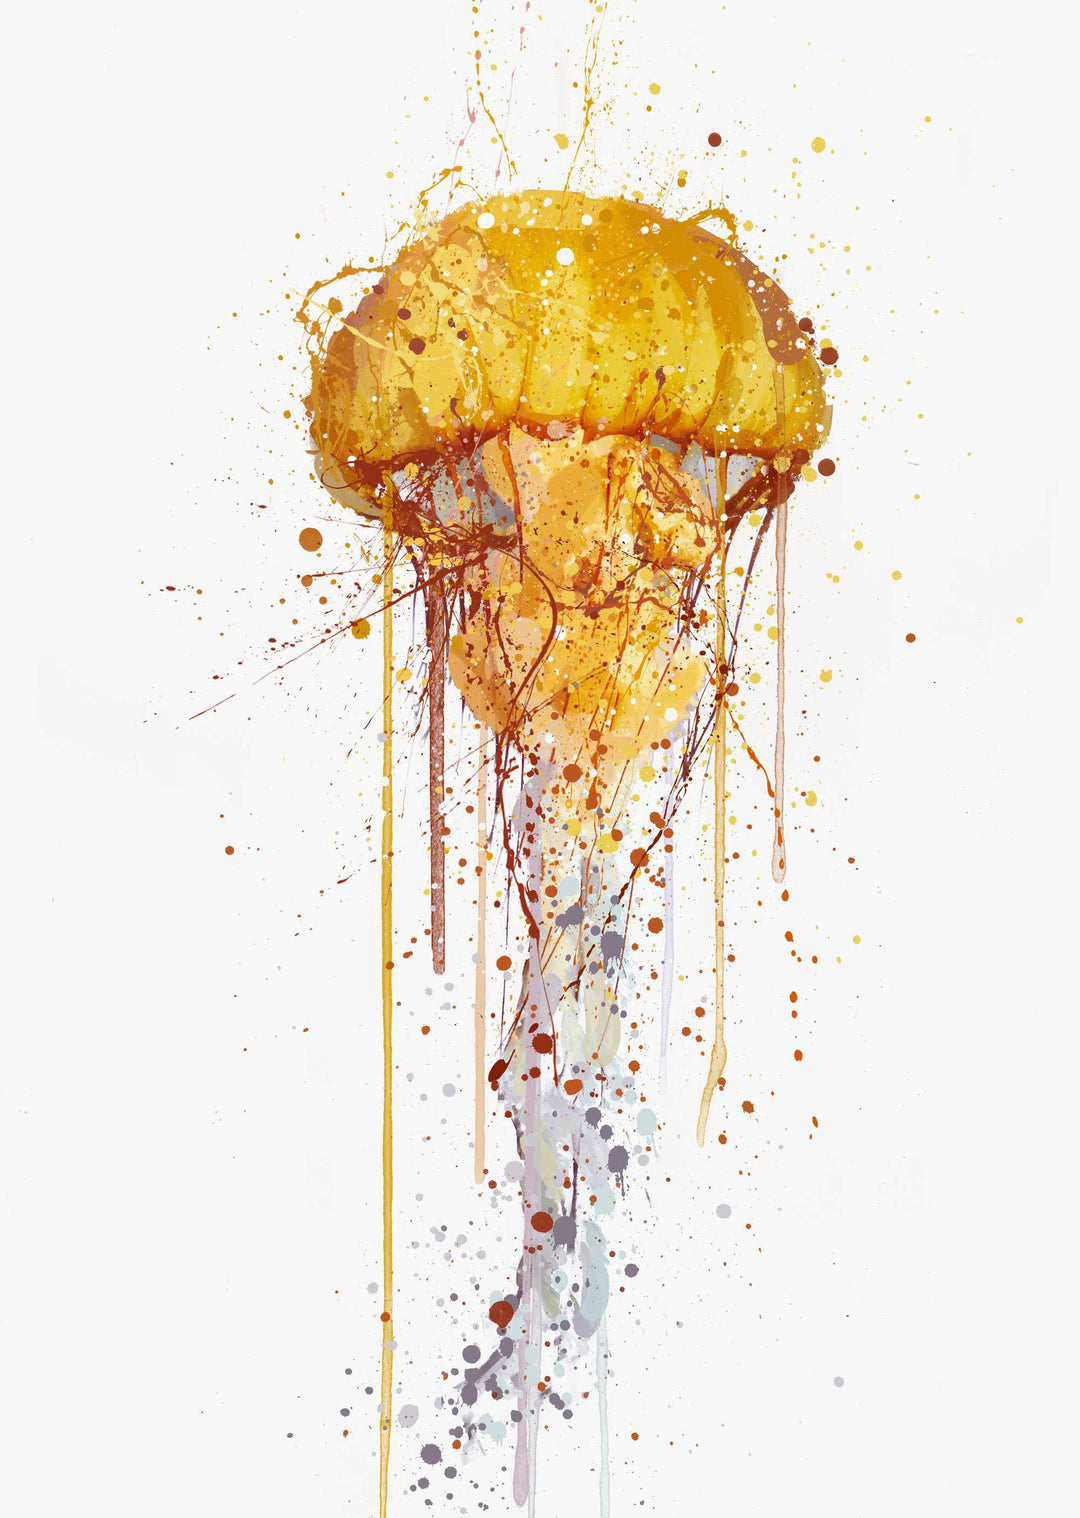 Sea Creature Wall Art Print 'Jellyfish'-We Love Prints